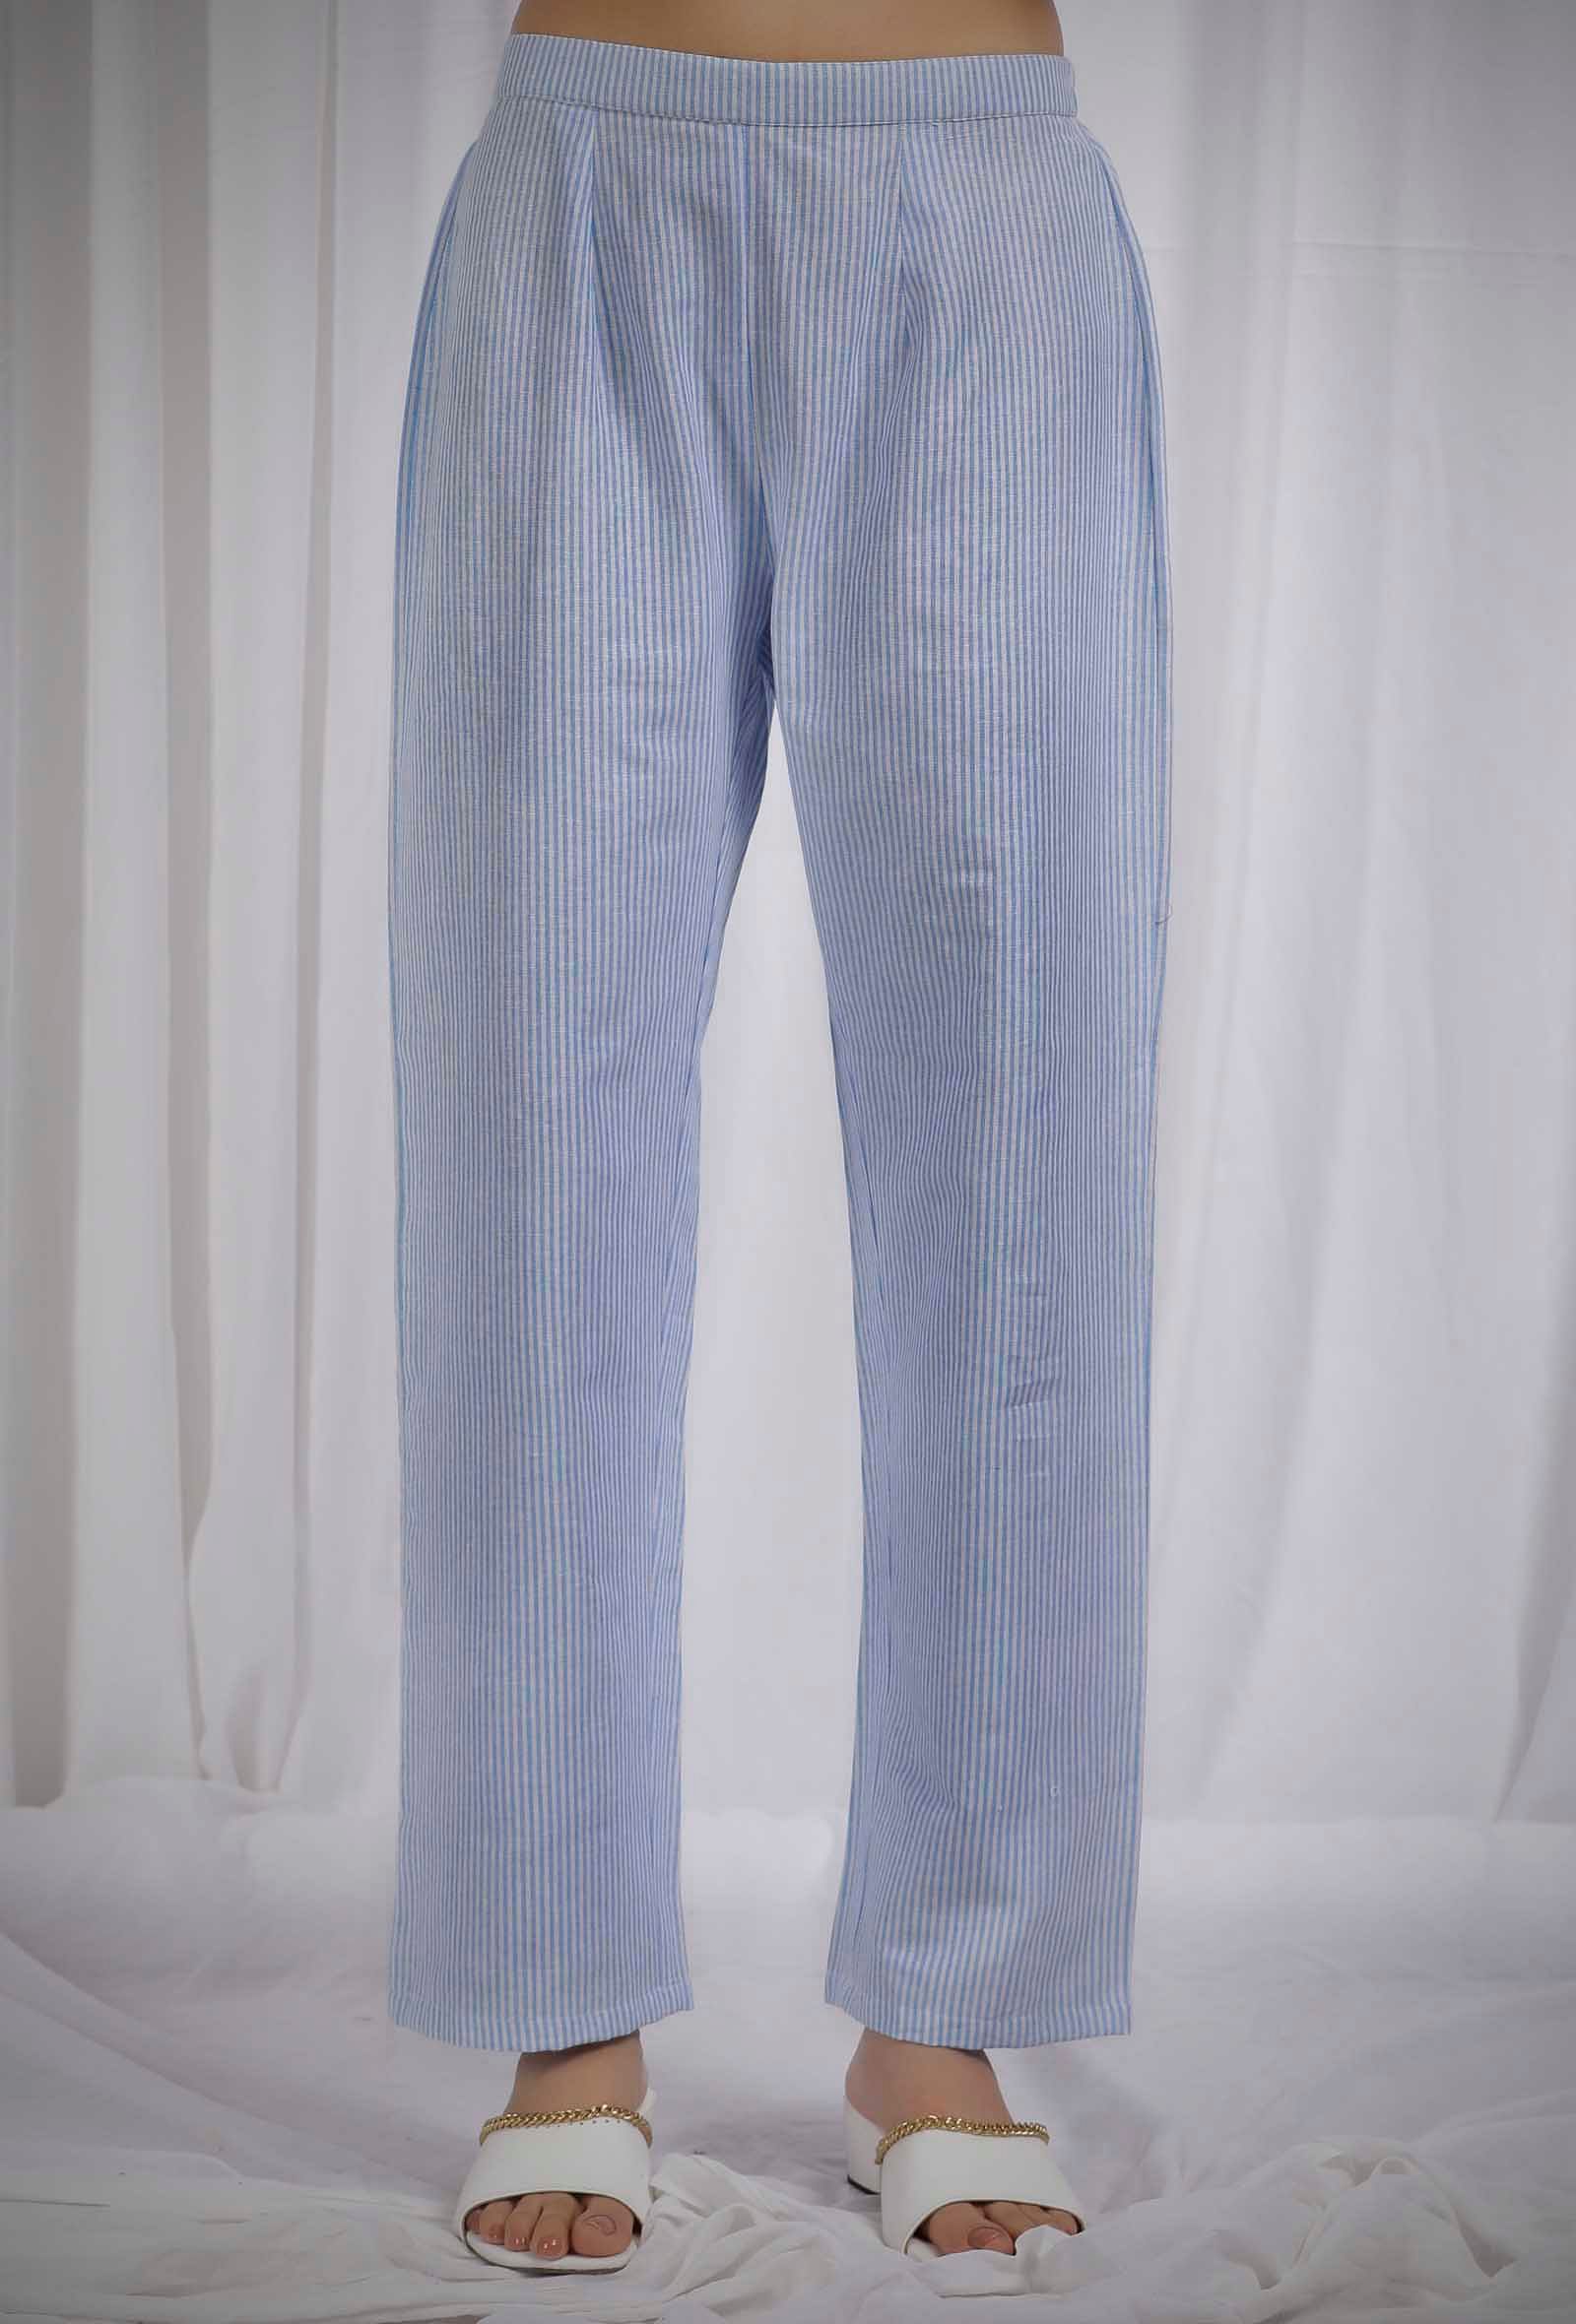 Blue Woven Cotton Striped Straight Pants